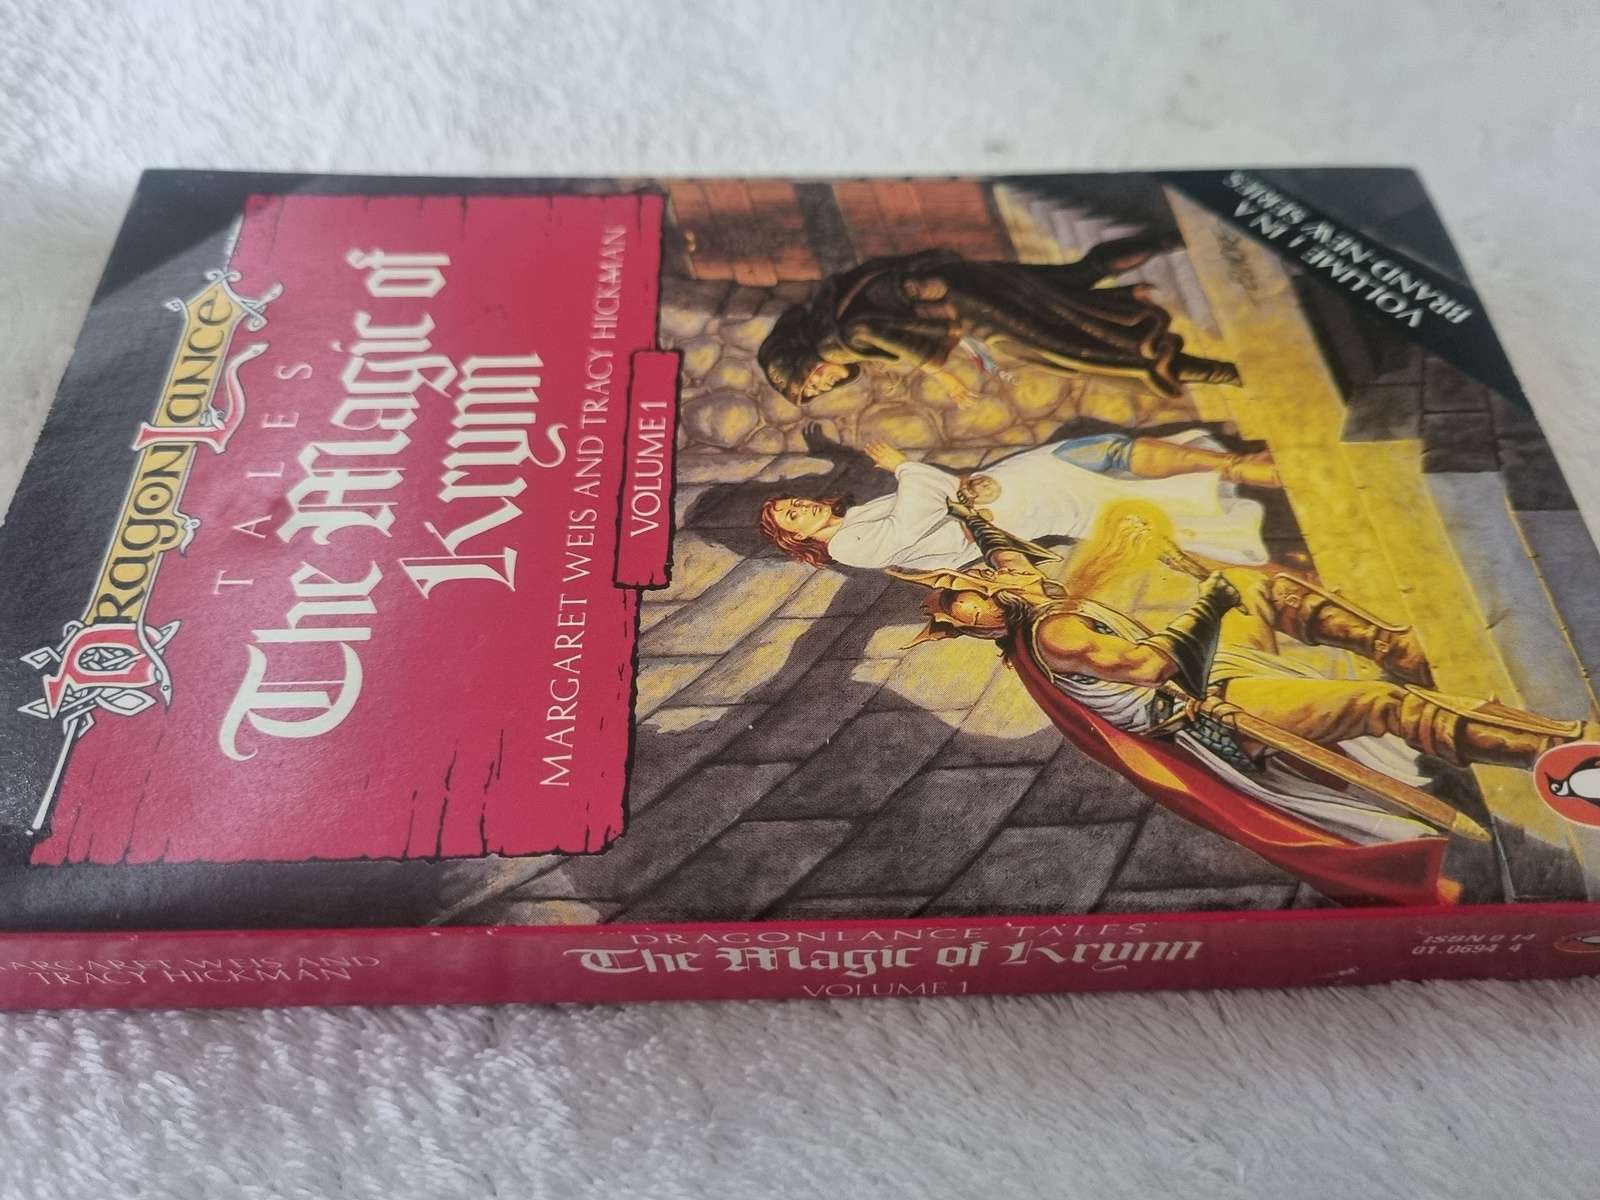 Dragonlance Tales: The Magic of Krynn - Margaret Weis & Tracy Hickman